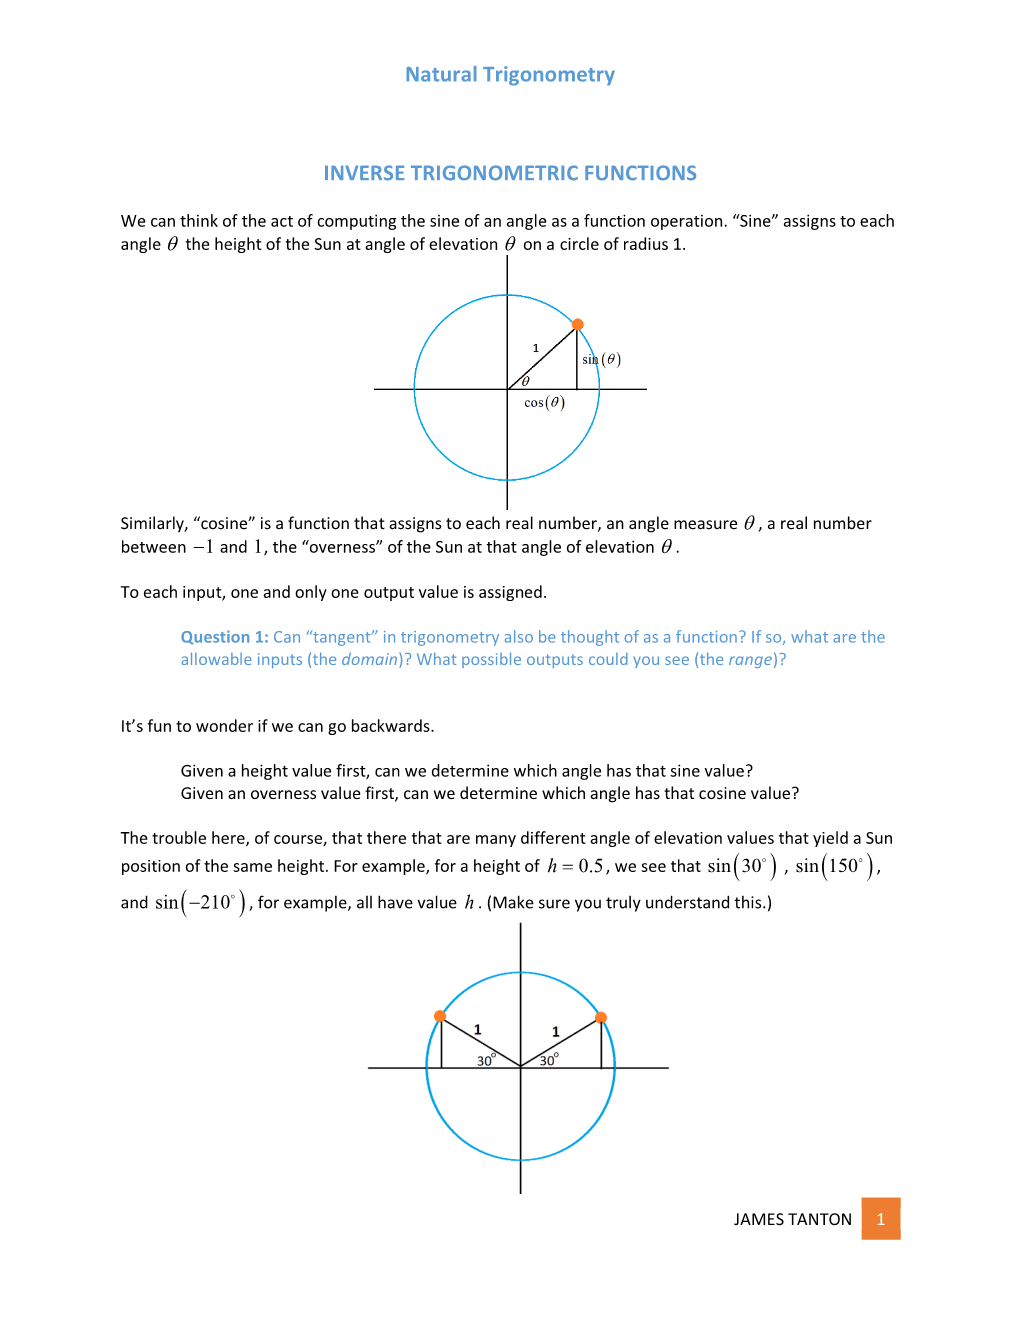 Natural Trigonometry INVERSE TRIGONOMETRIC FUNCTIONS